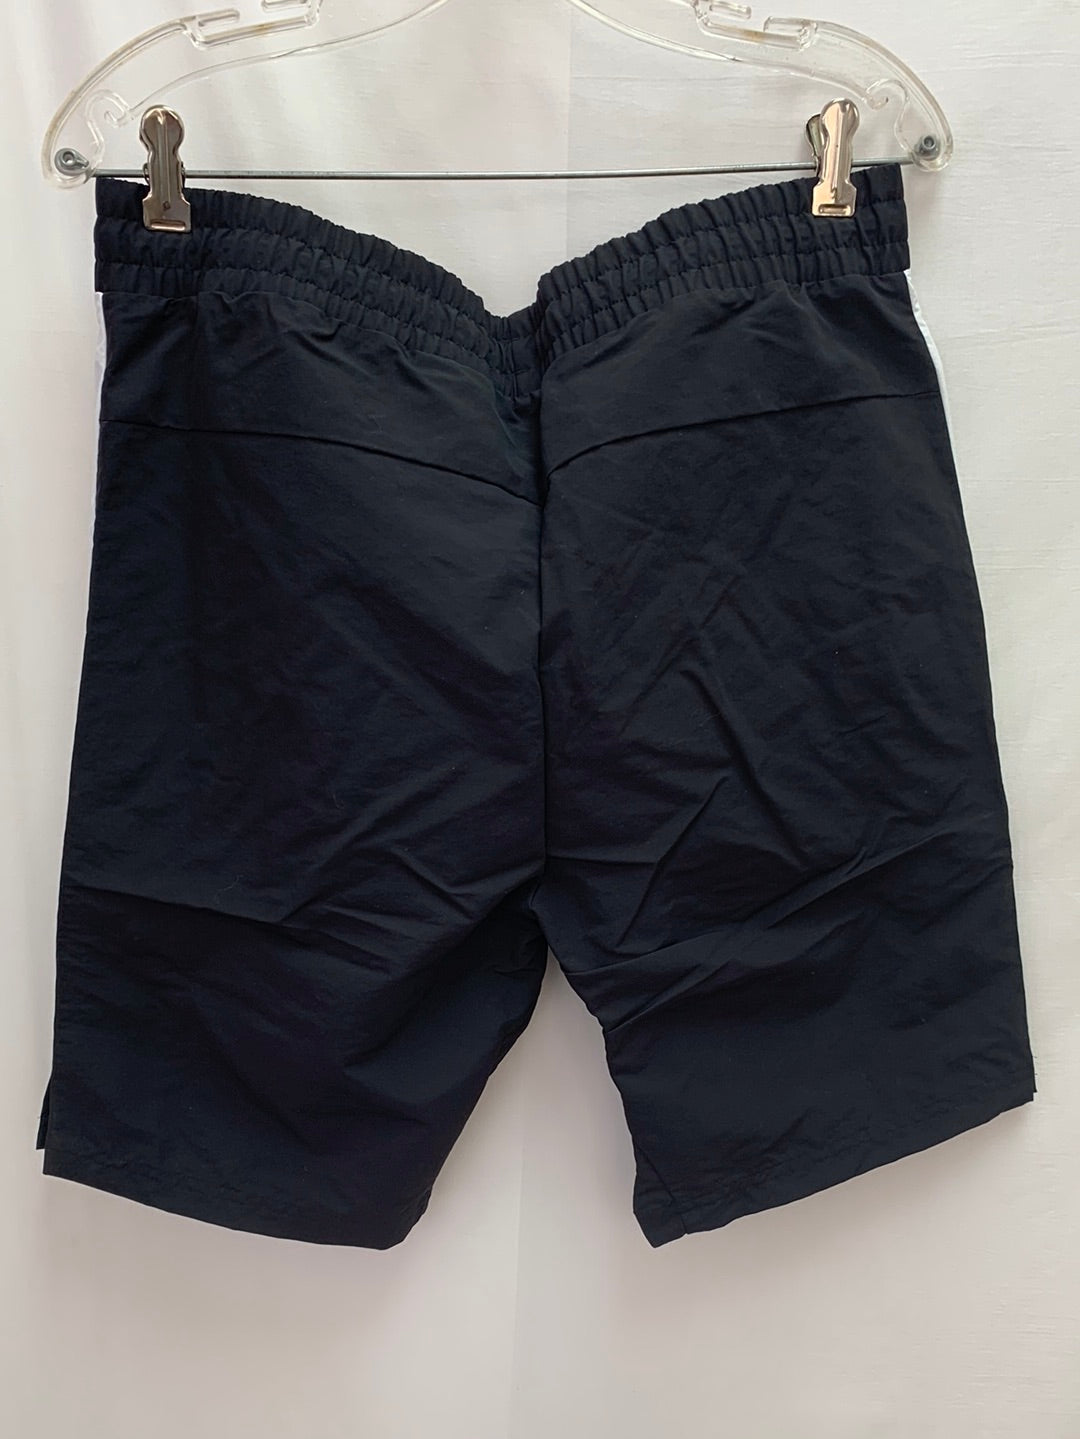 NWT - REEBOK black white MYT Woven Side Snap Shorts - Medium